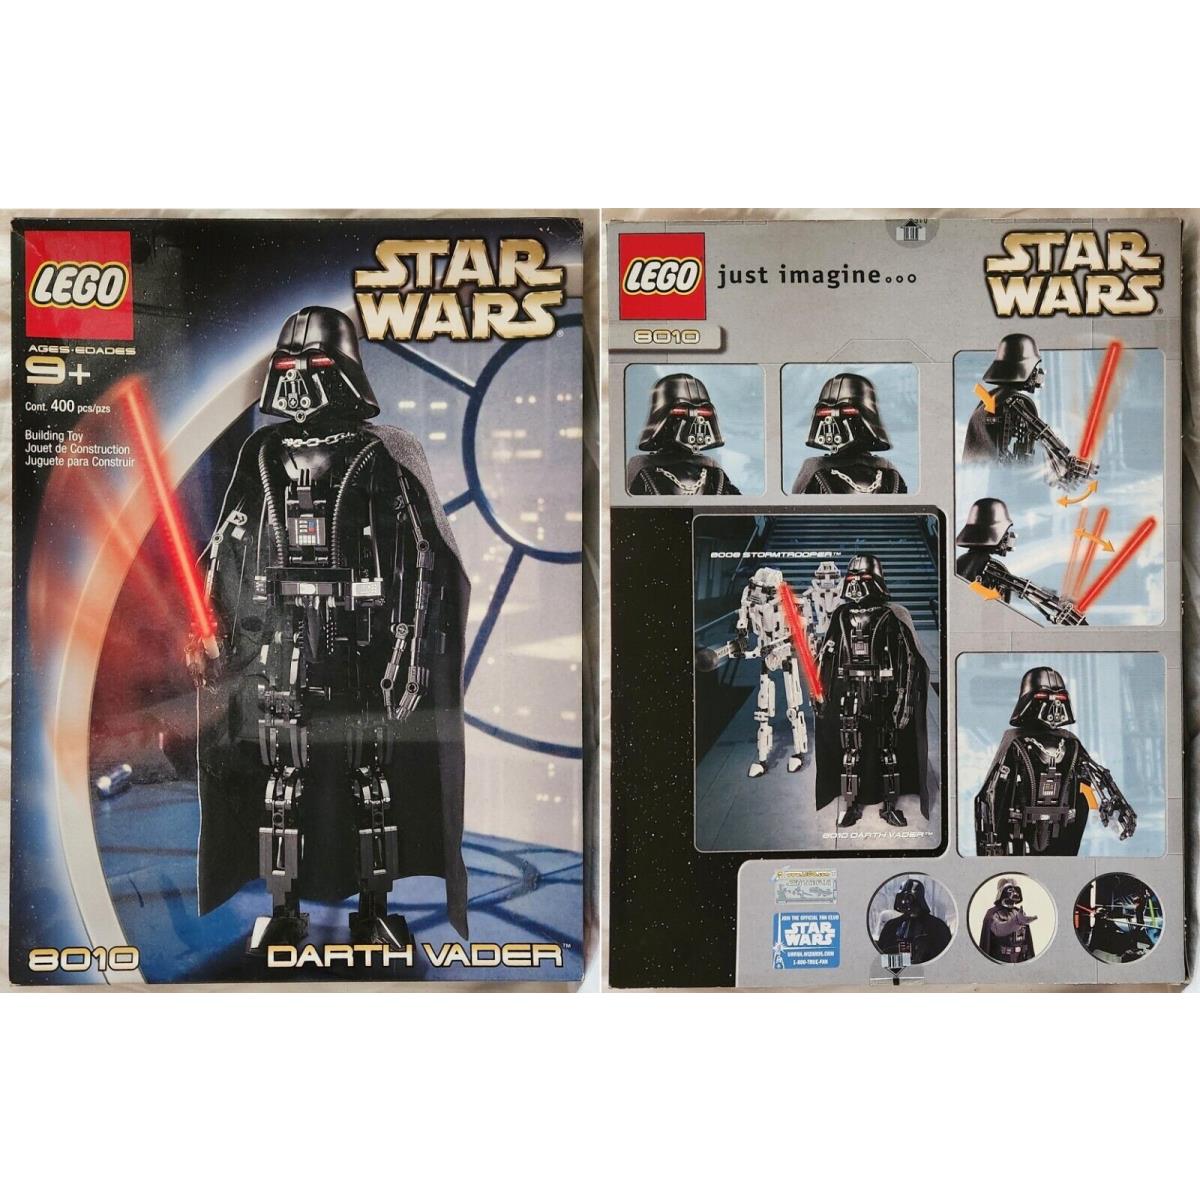 Lego 8010 Star Wars Darth Vader - IN Factory Box